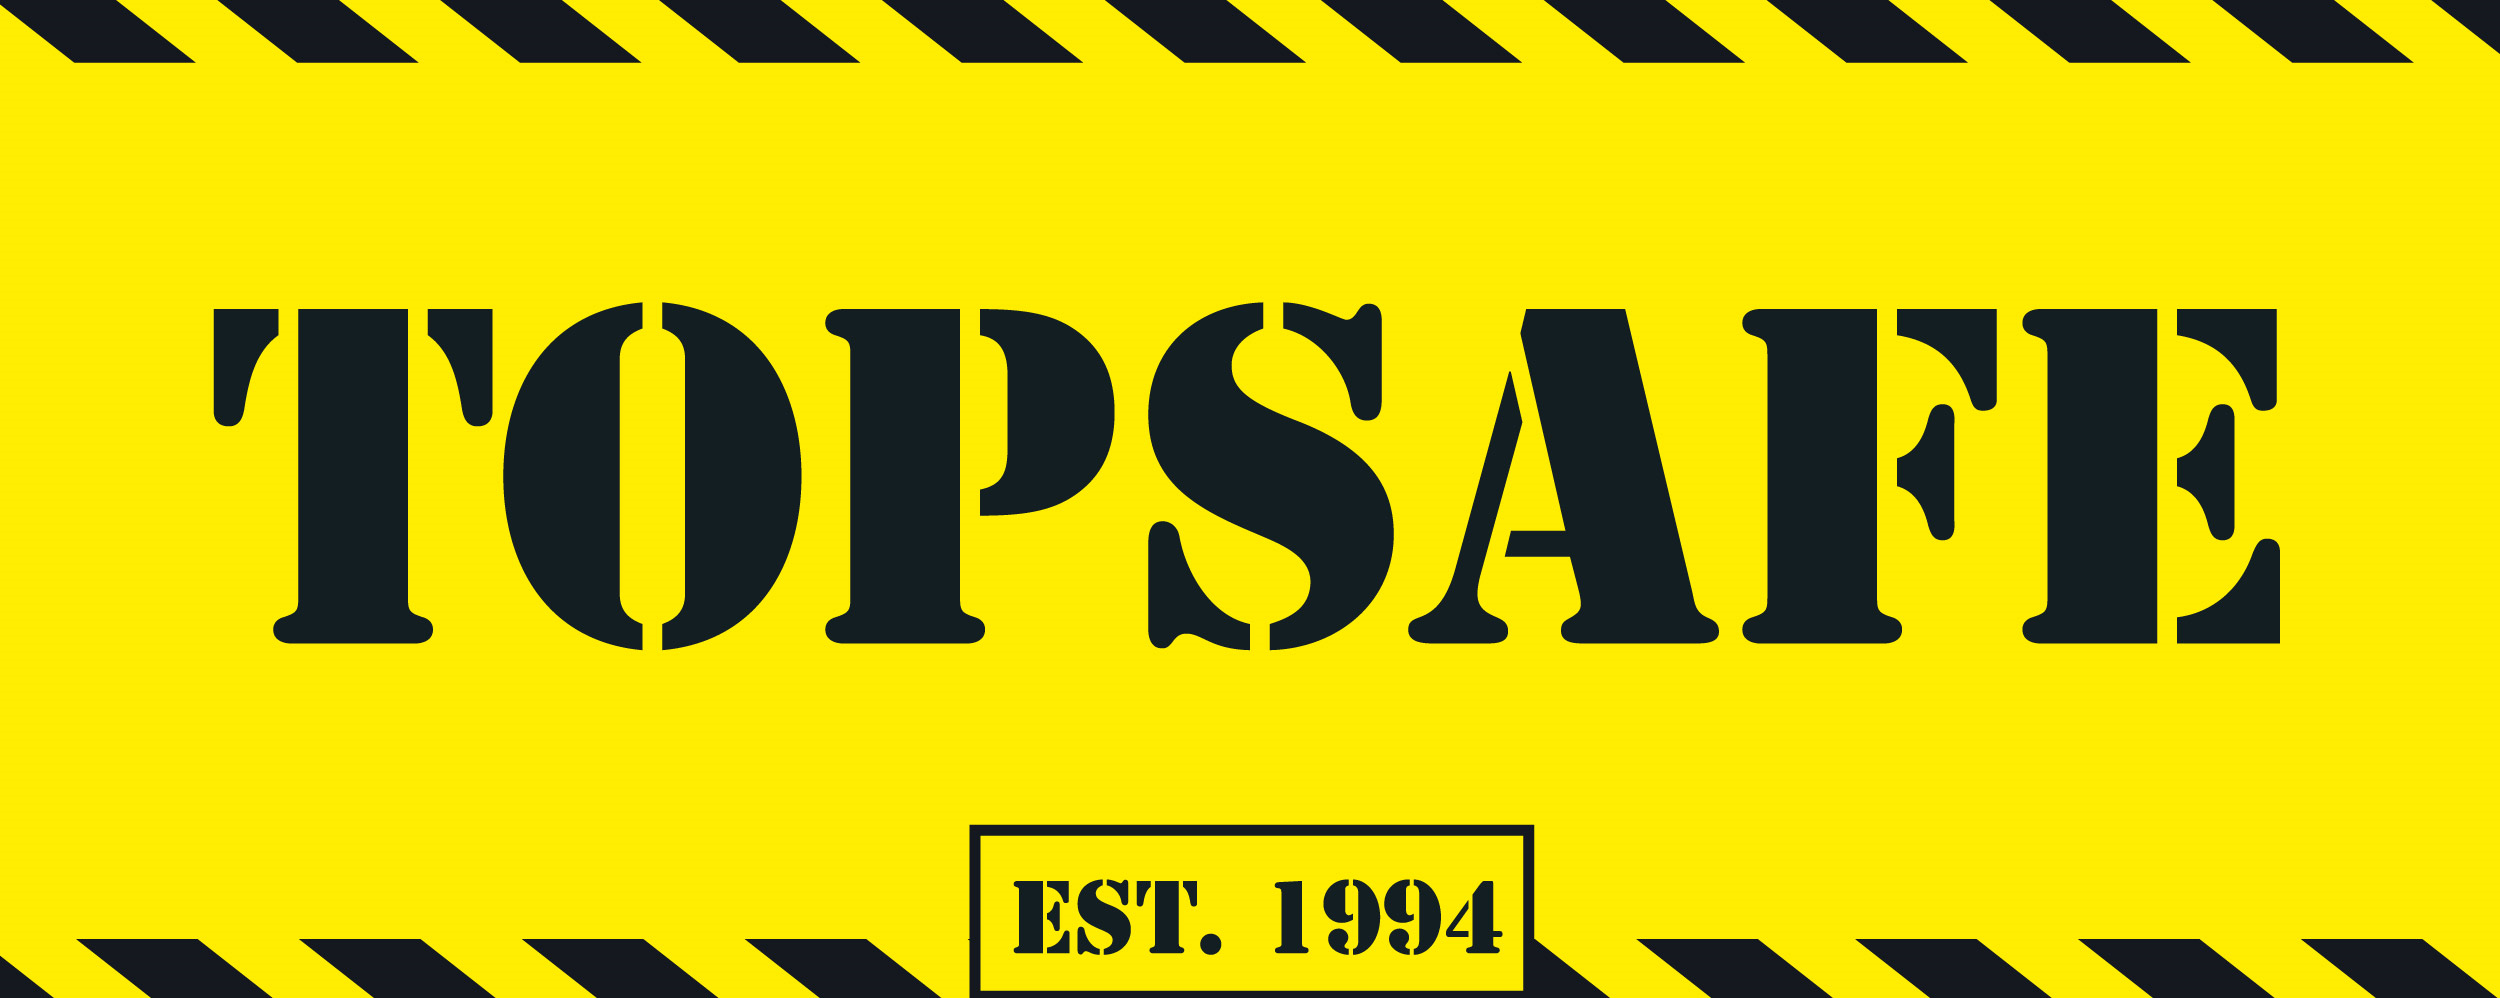 Topsafe logo